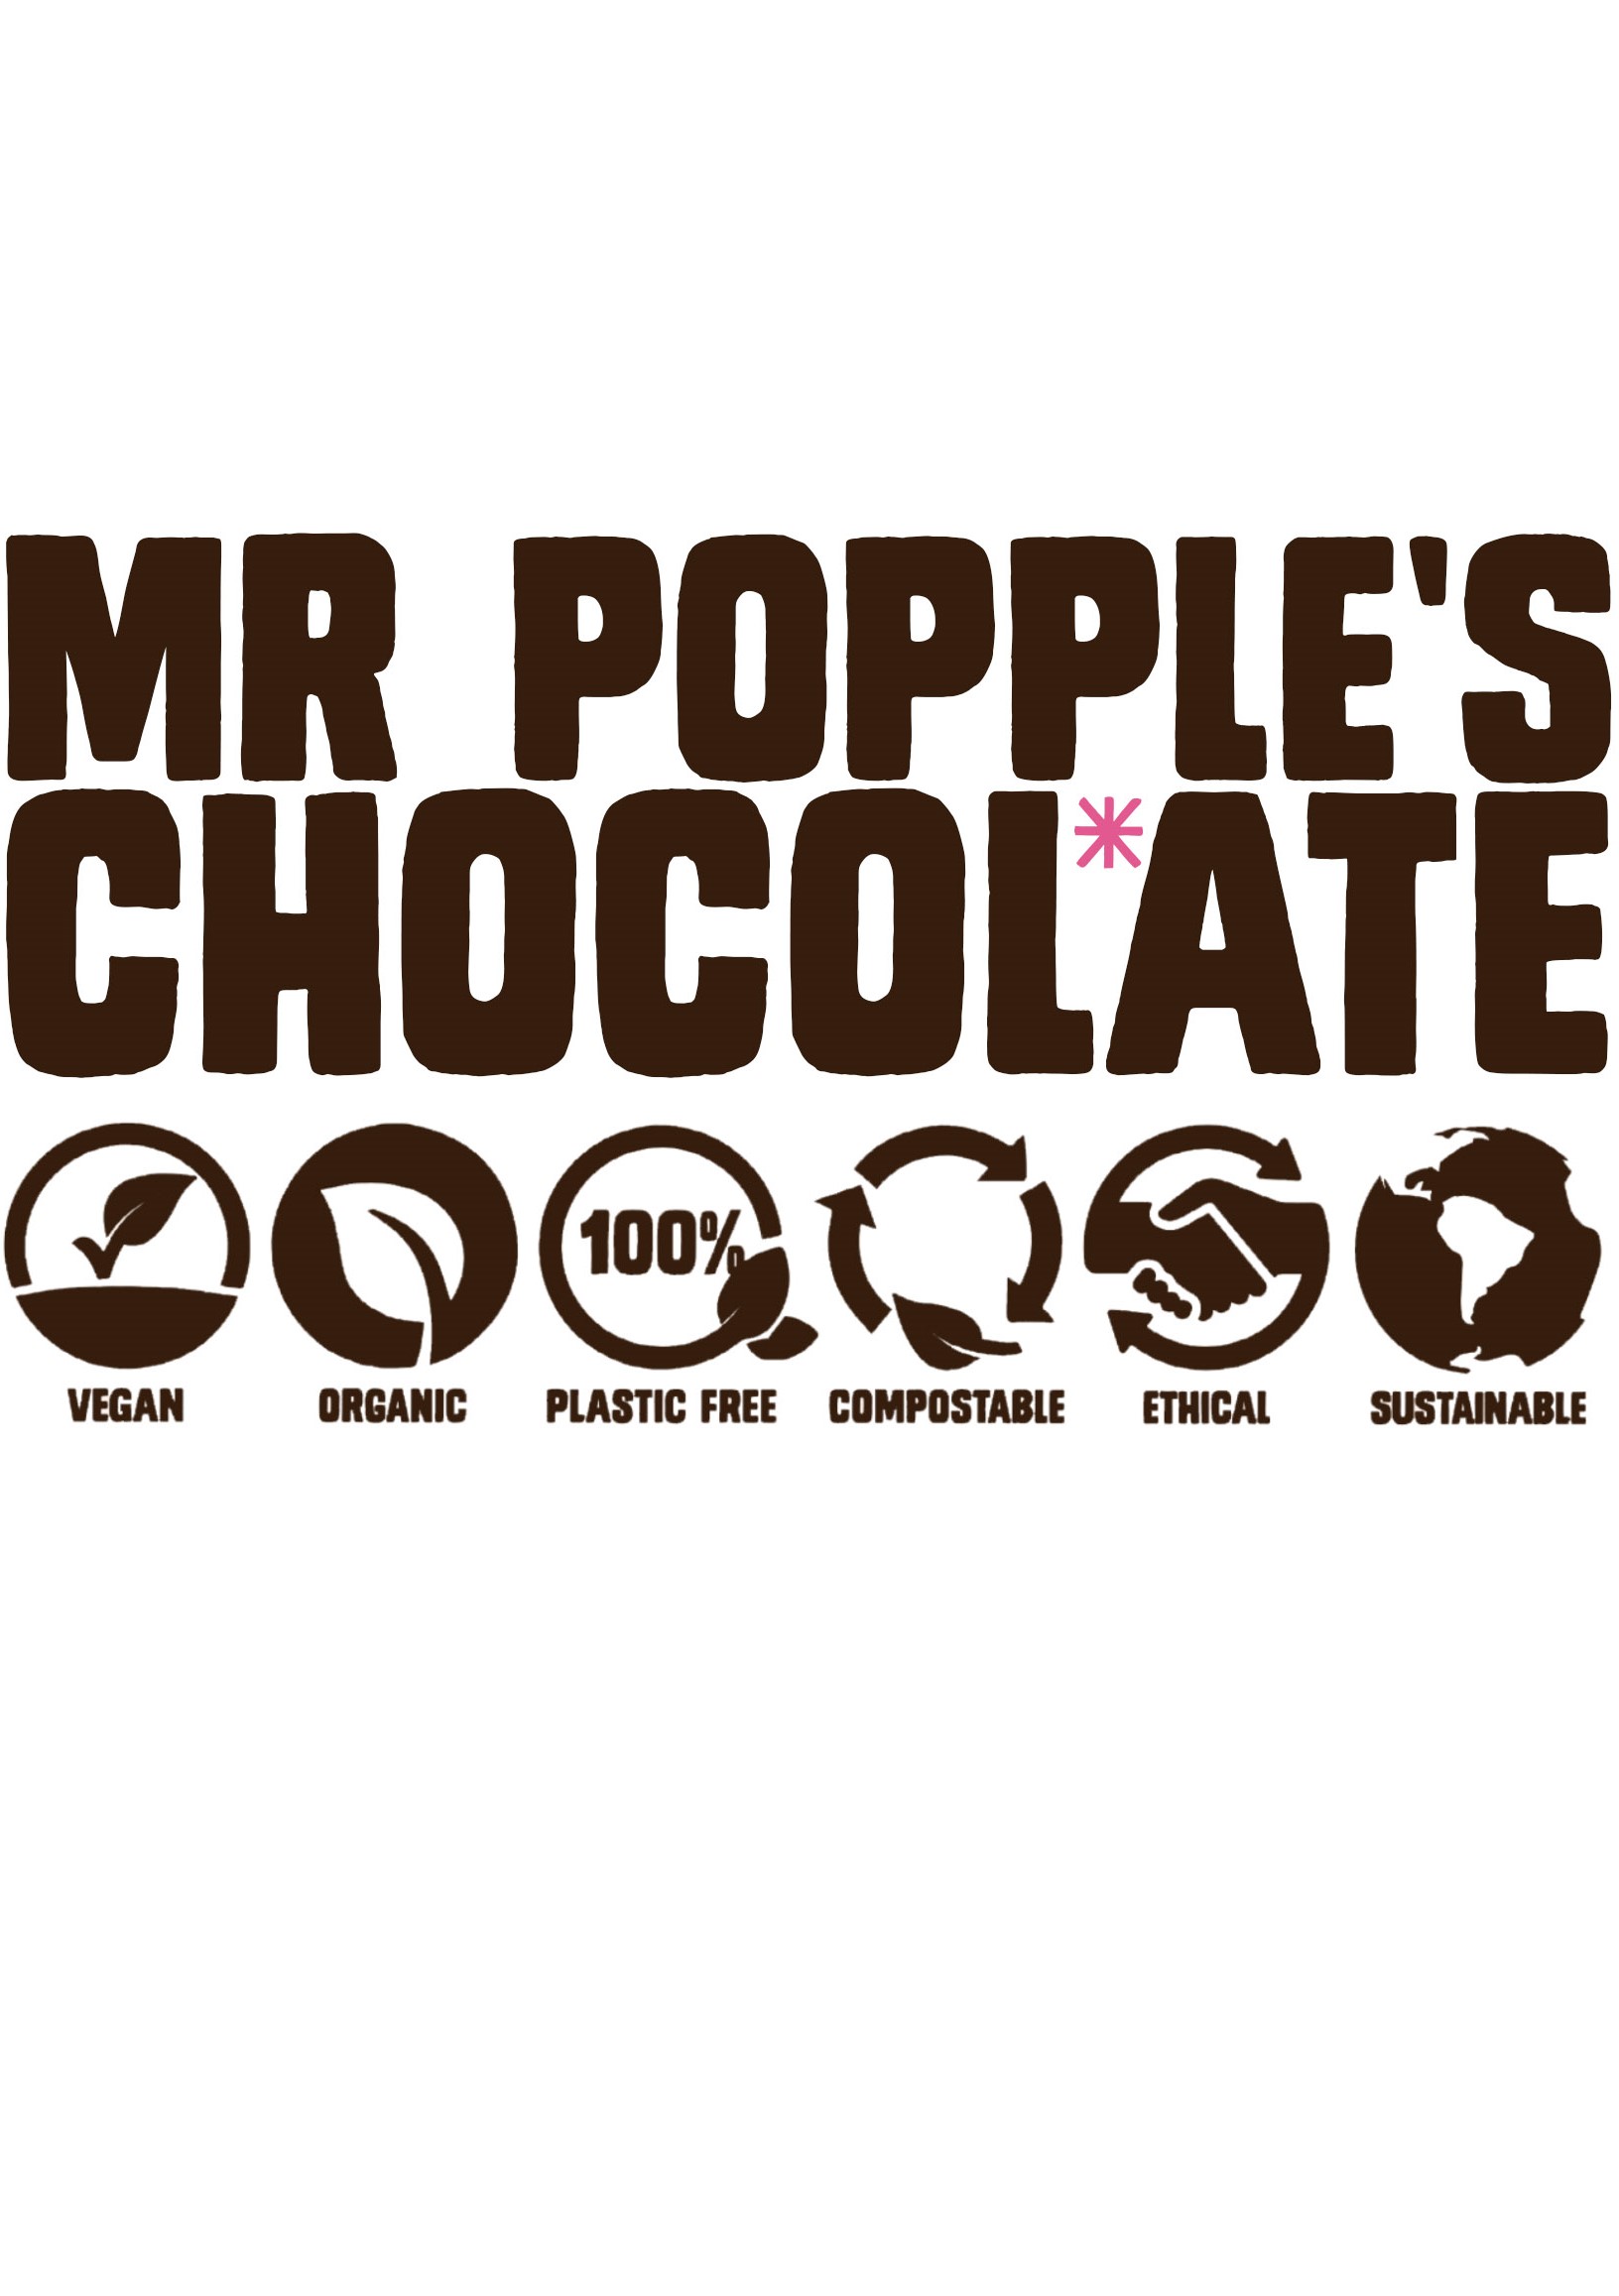 Mr Popple's Chocolate